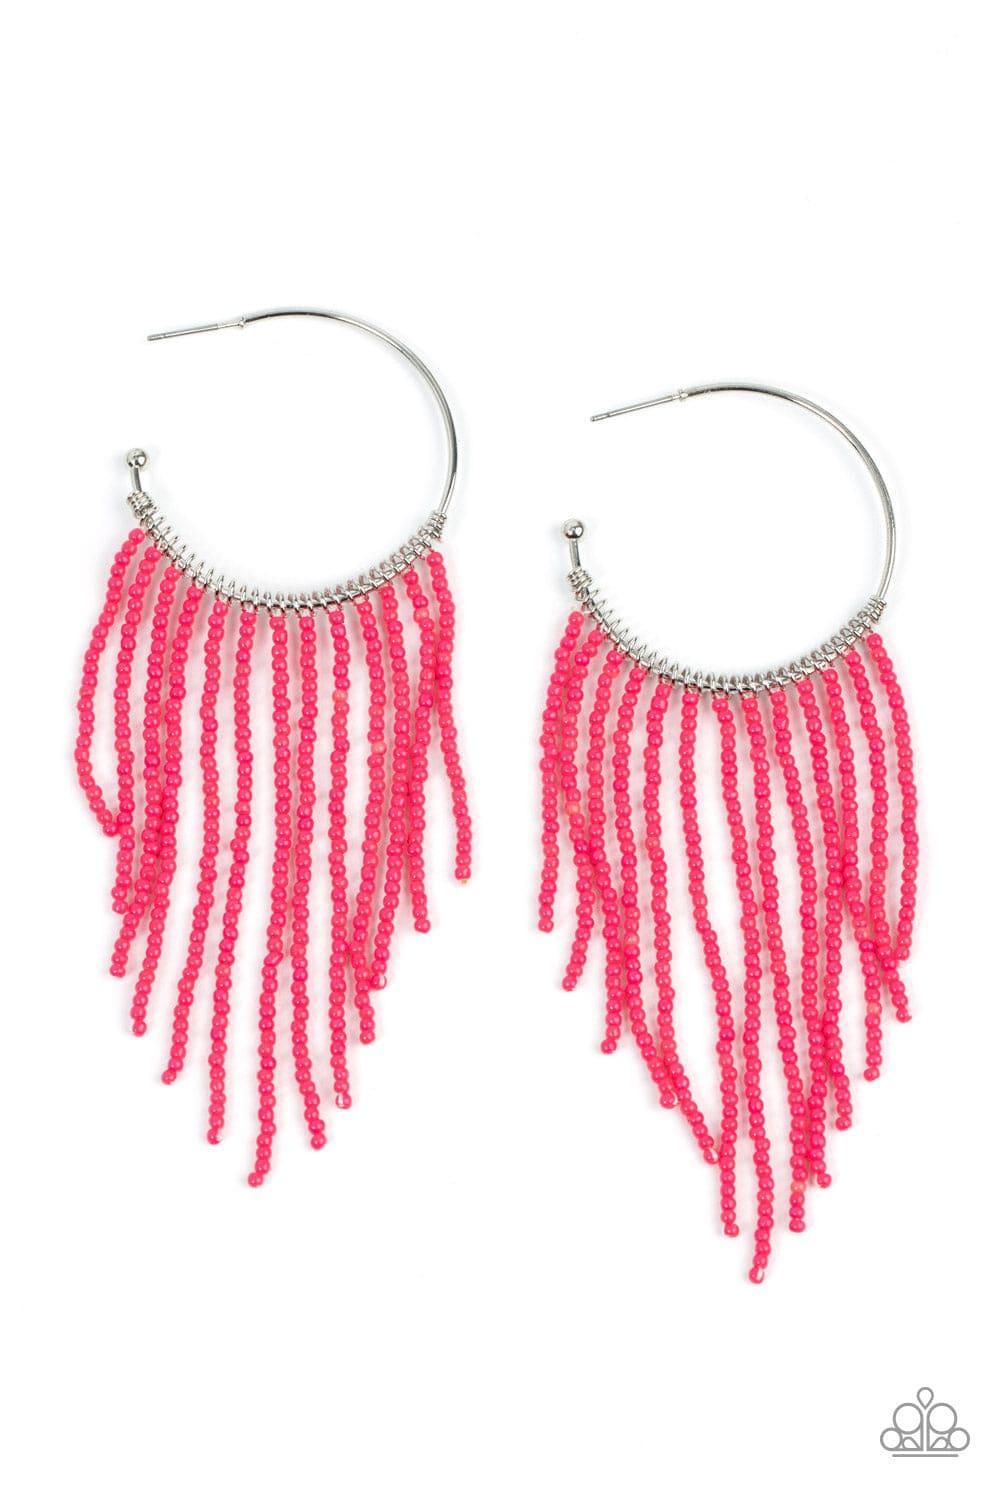 Paparazzi Accessories - Saguaro Breeze - Pink Hoop Earrings - Bling by JessieK